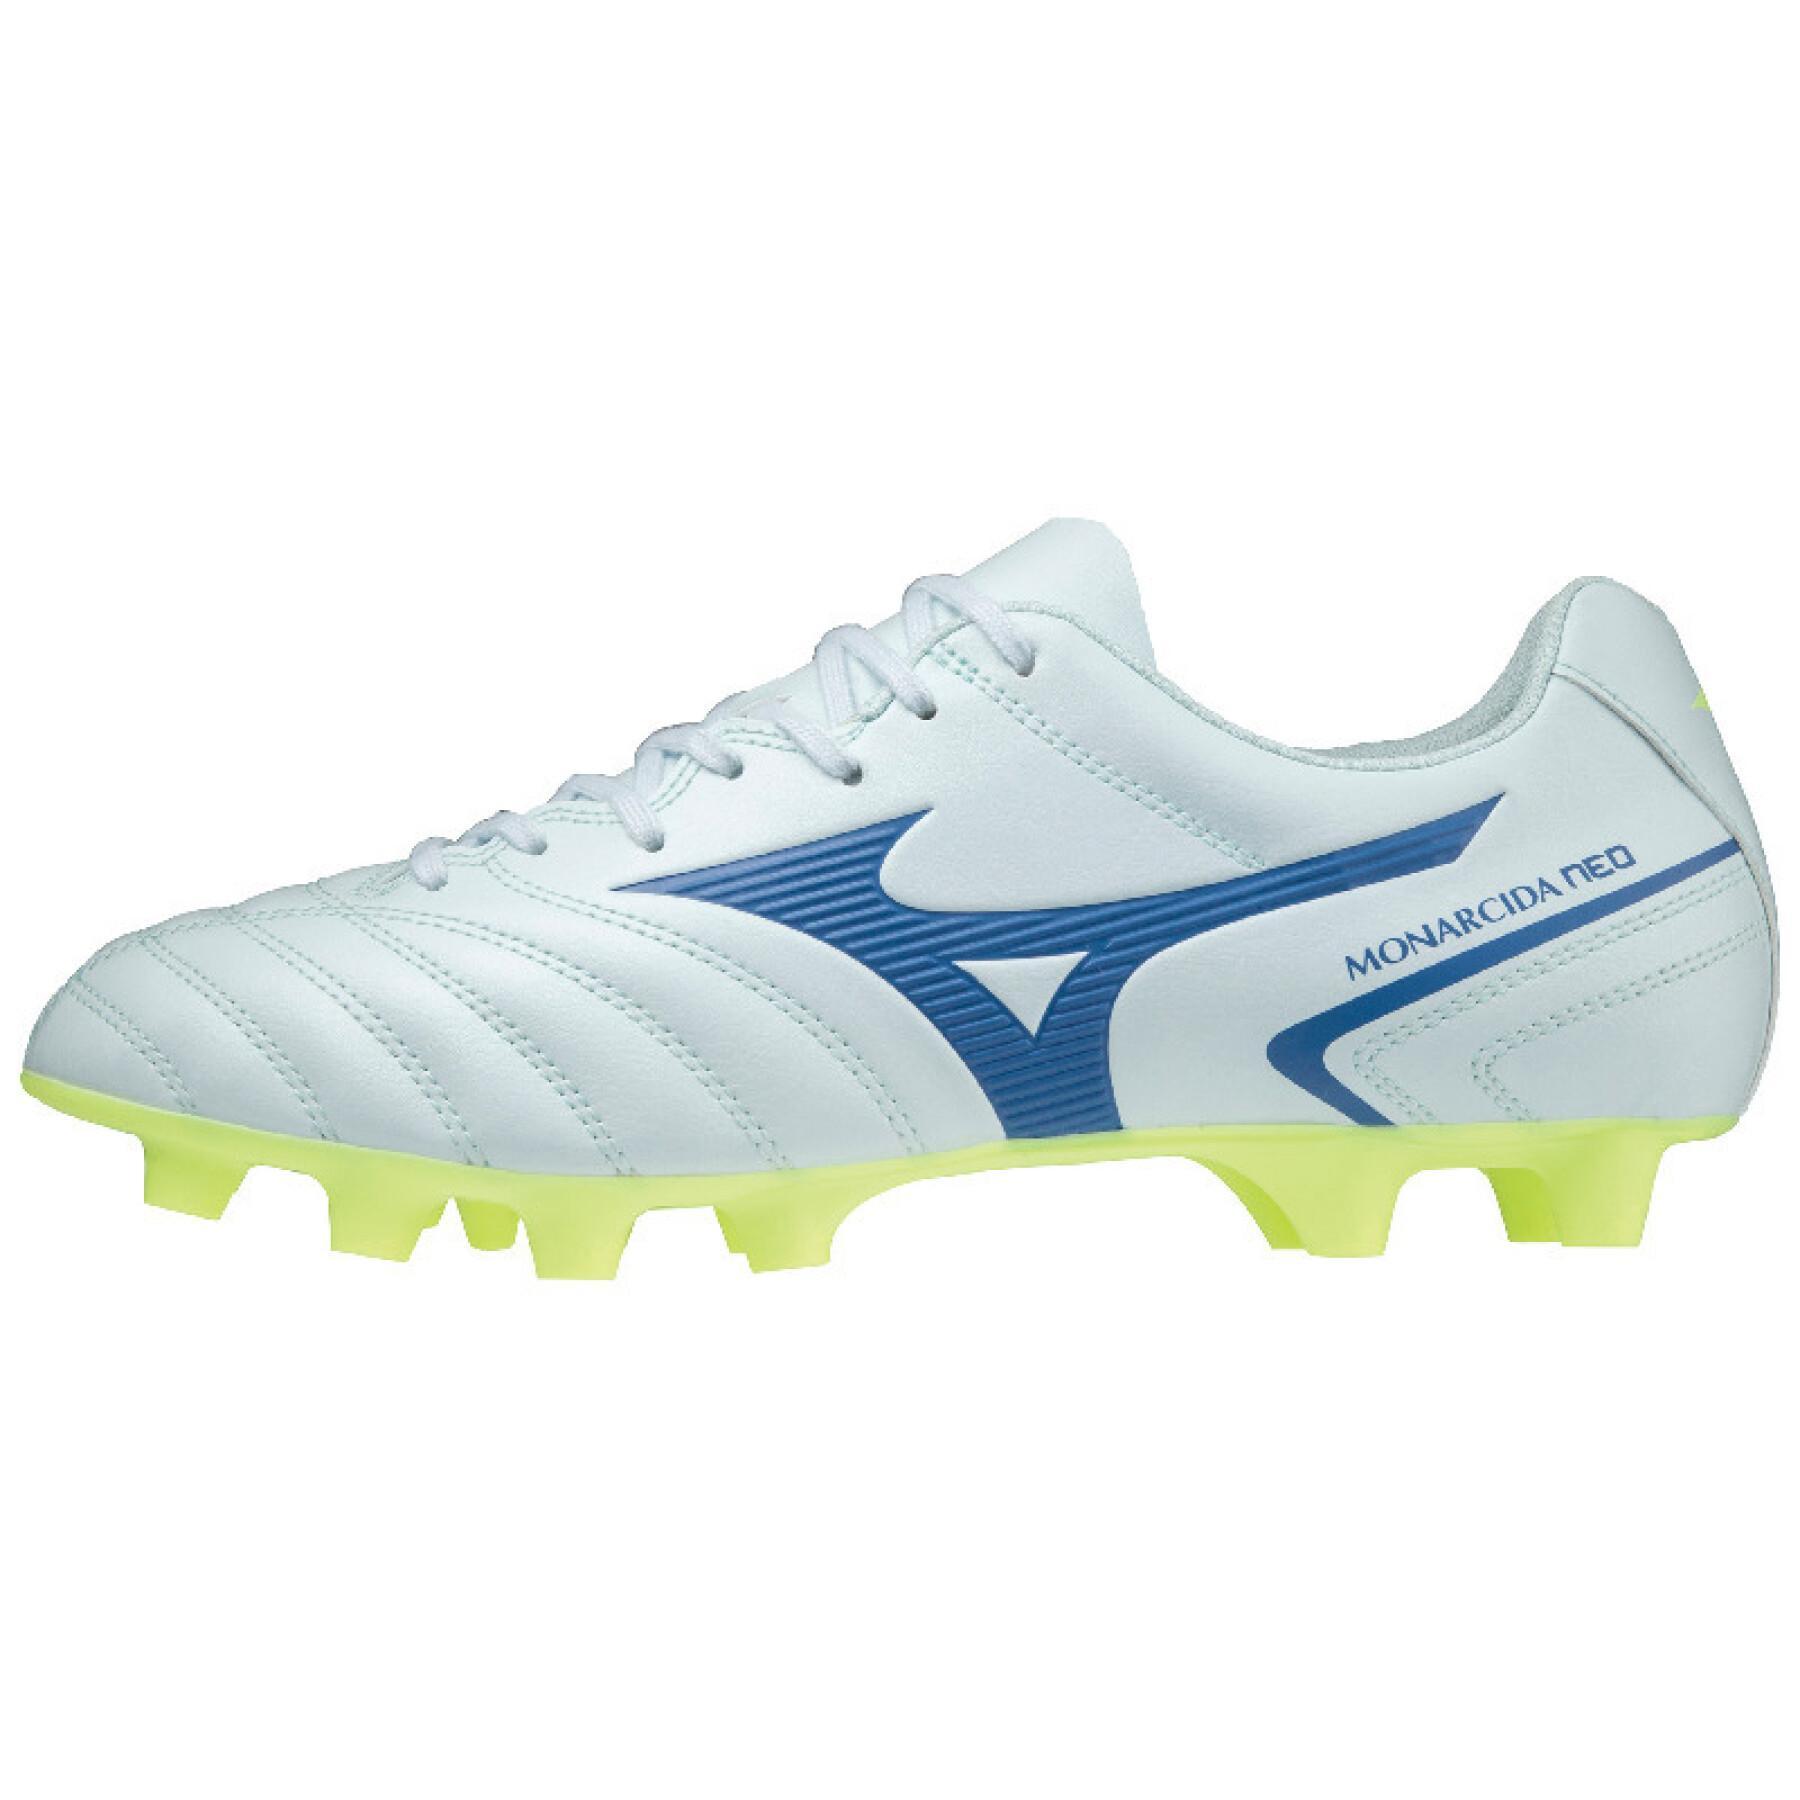 Chaussures de football Mizuno Monarcida Neo Select MD